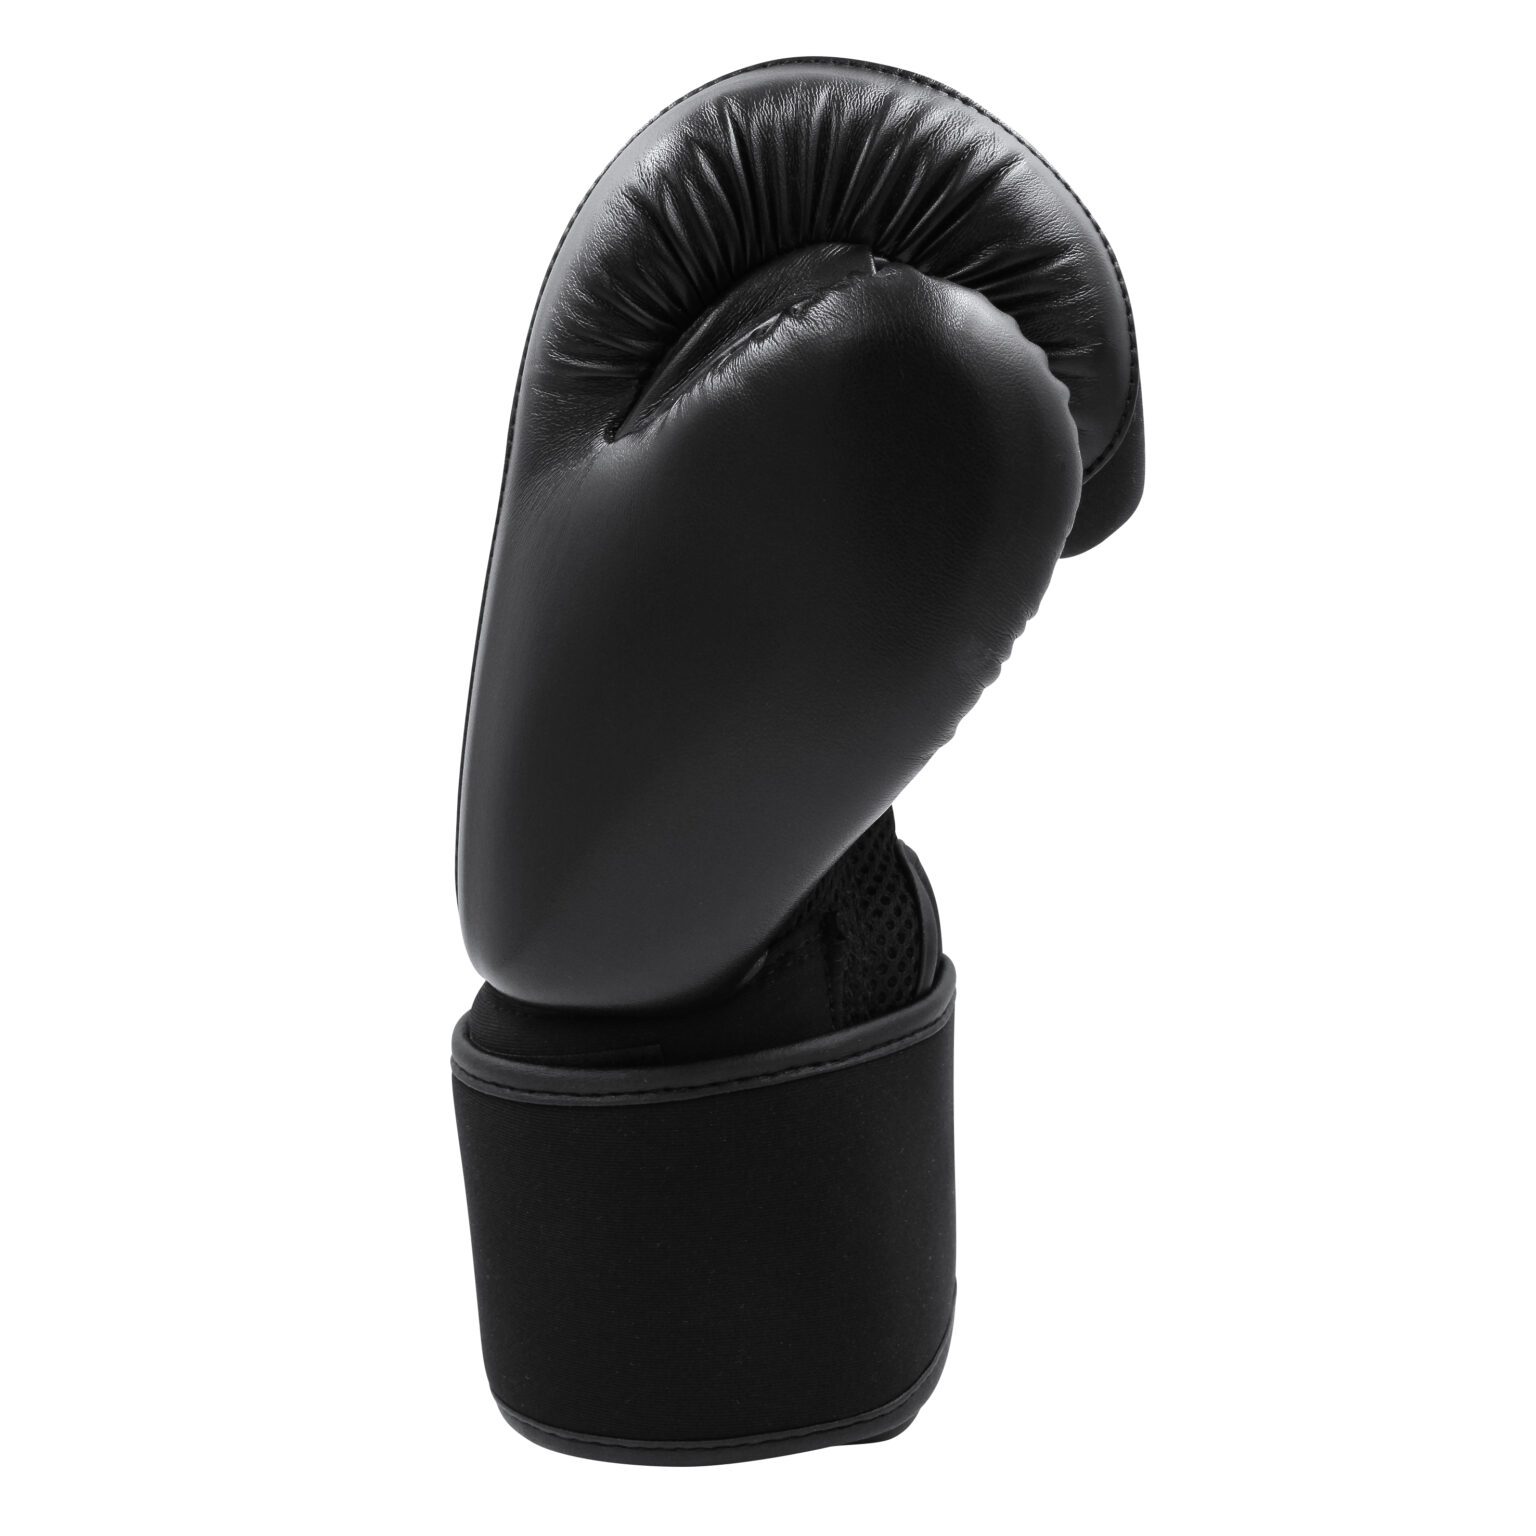 Boxing Gloves (Washable) Gold / Black